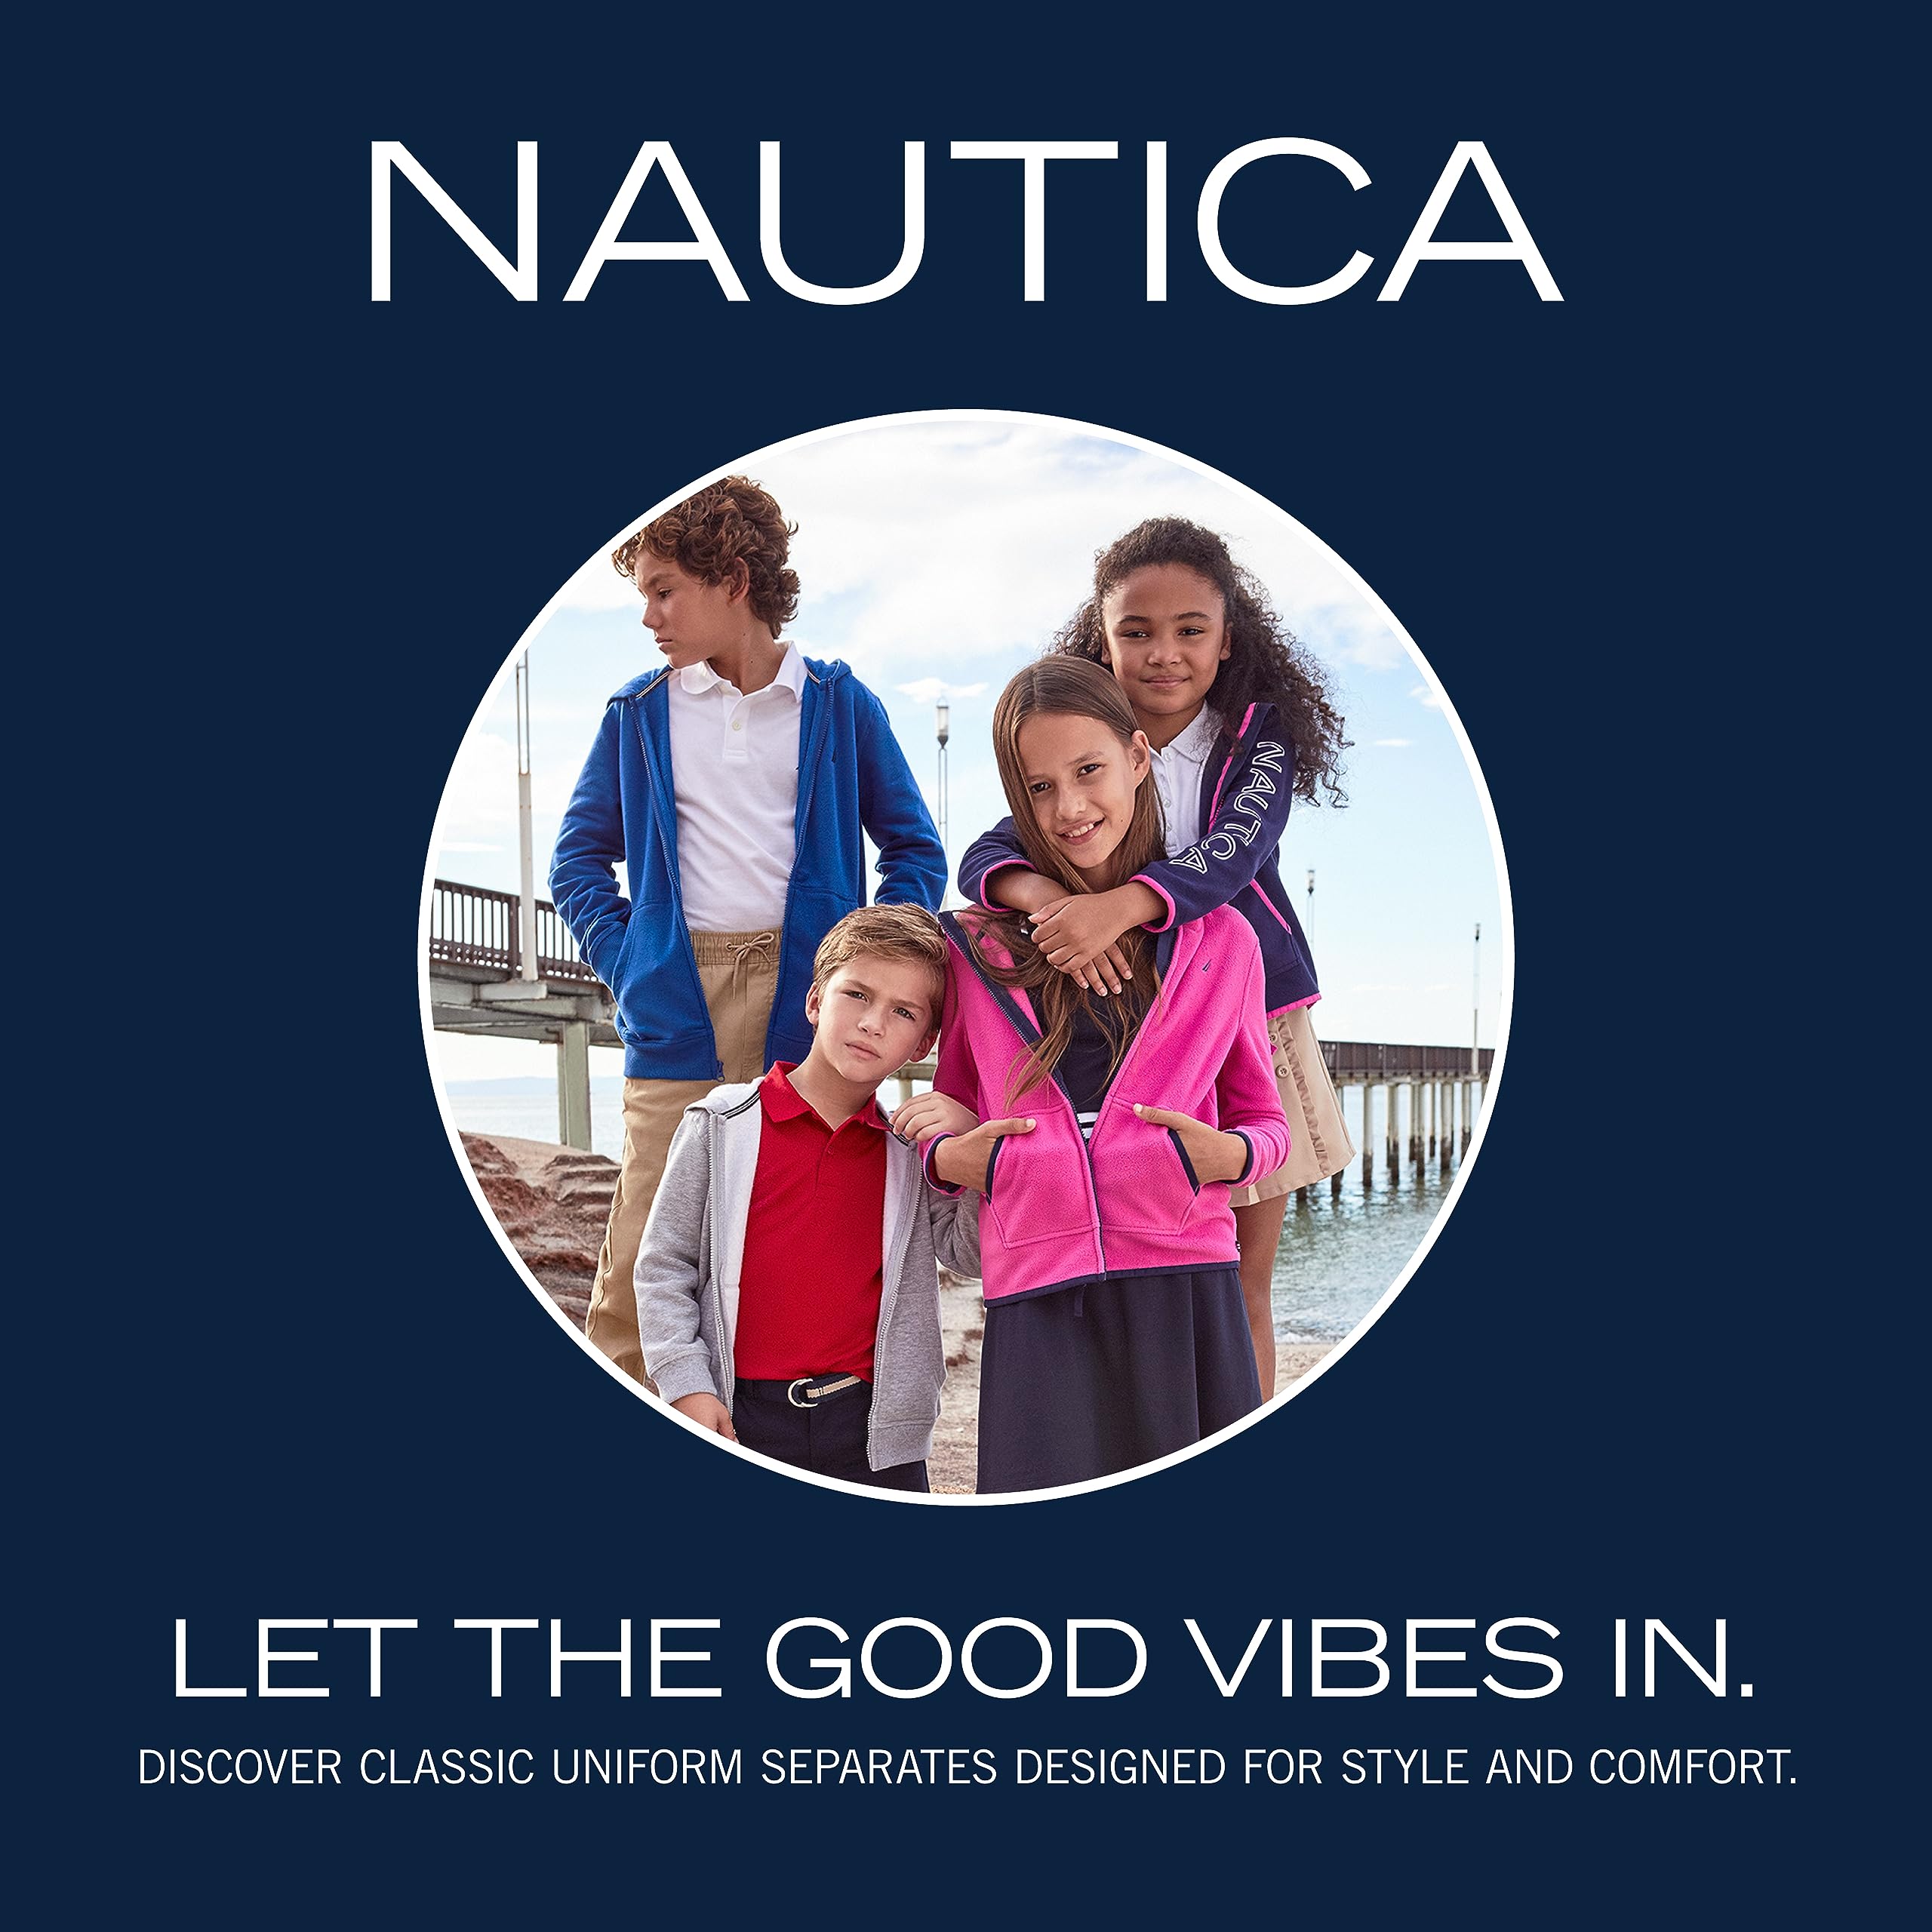 Nautica Girls' School Uniform Short Sleeve Polo Dress